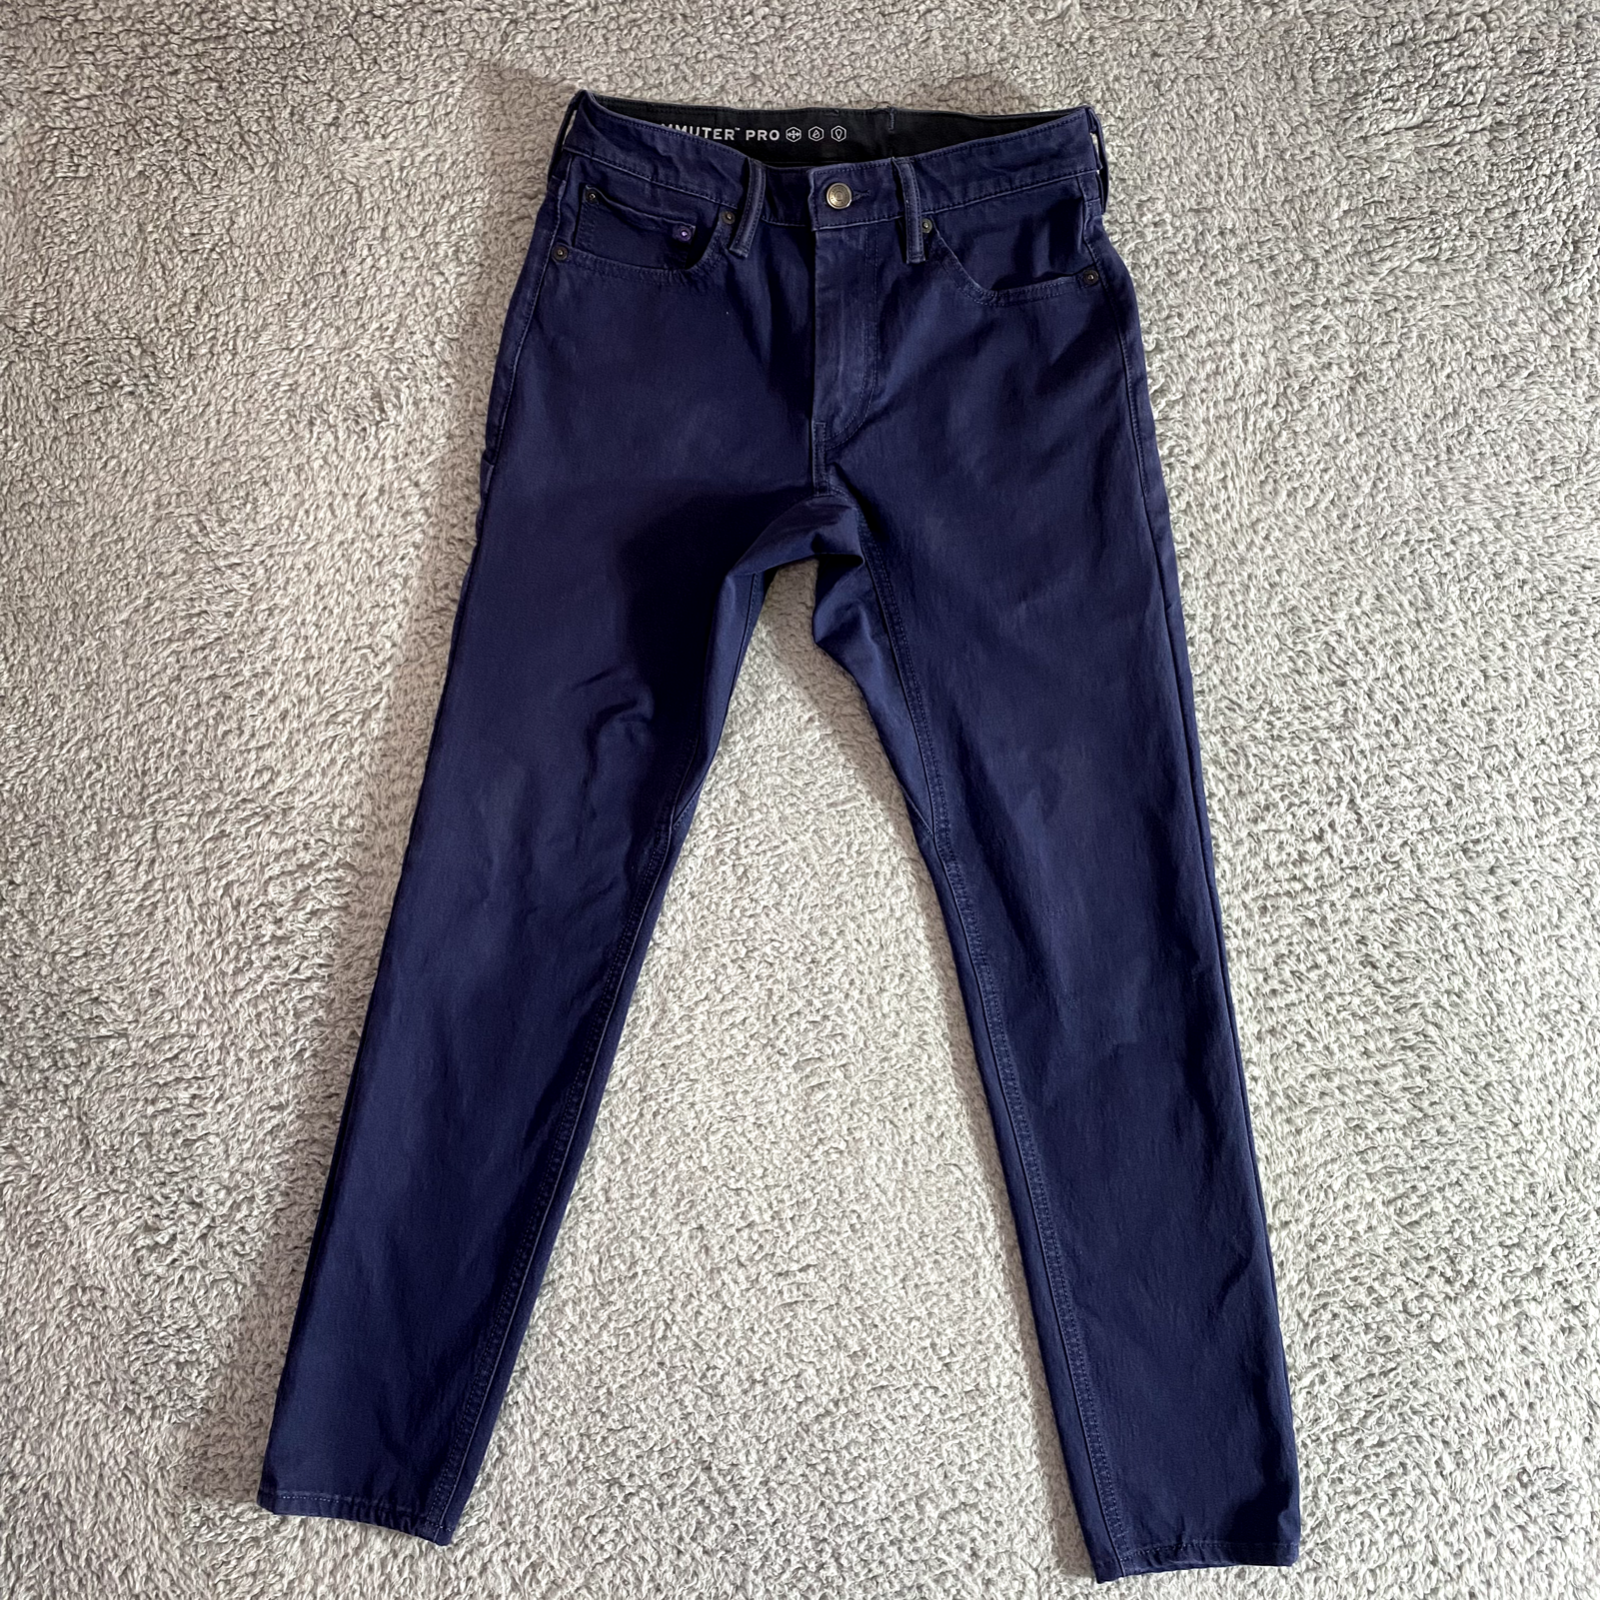 Contractie meten katje Levi's 512 Commuter Pro Jeans Mens 29x30 Reflective Stretch Reinforced |  eBay